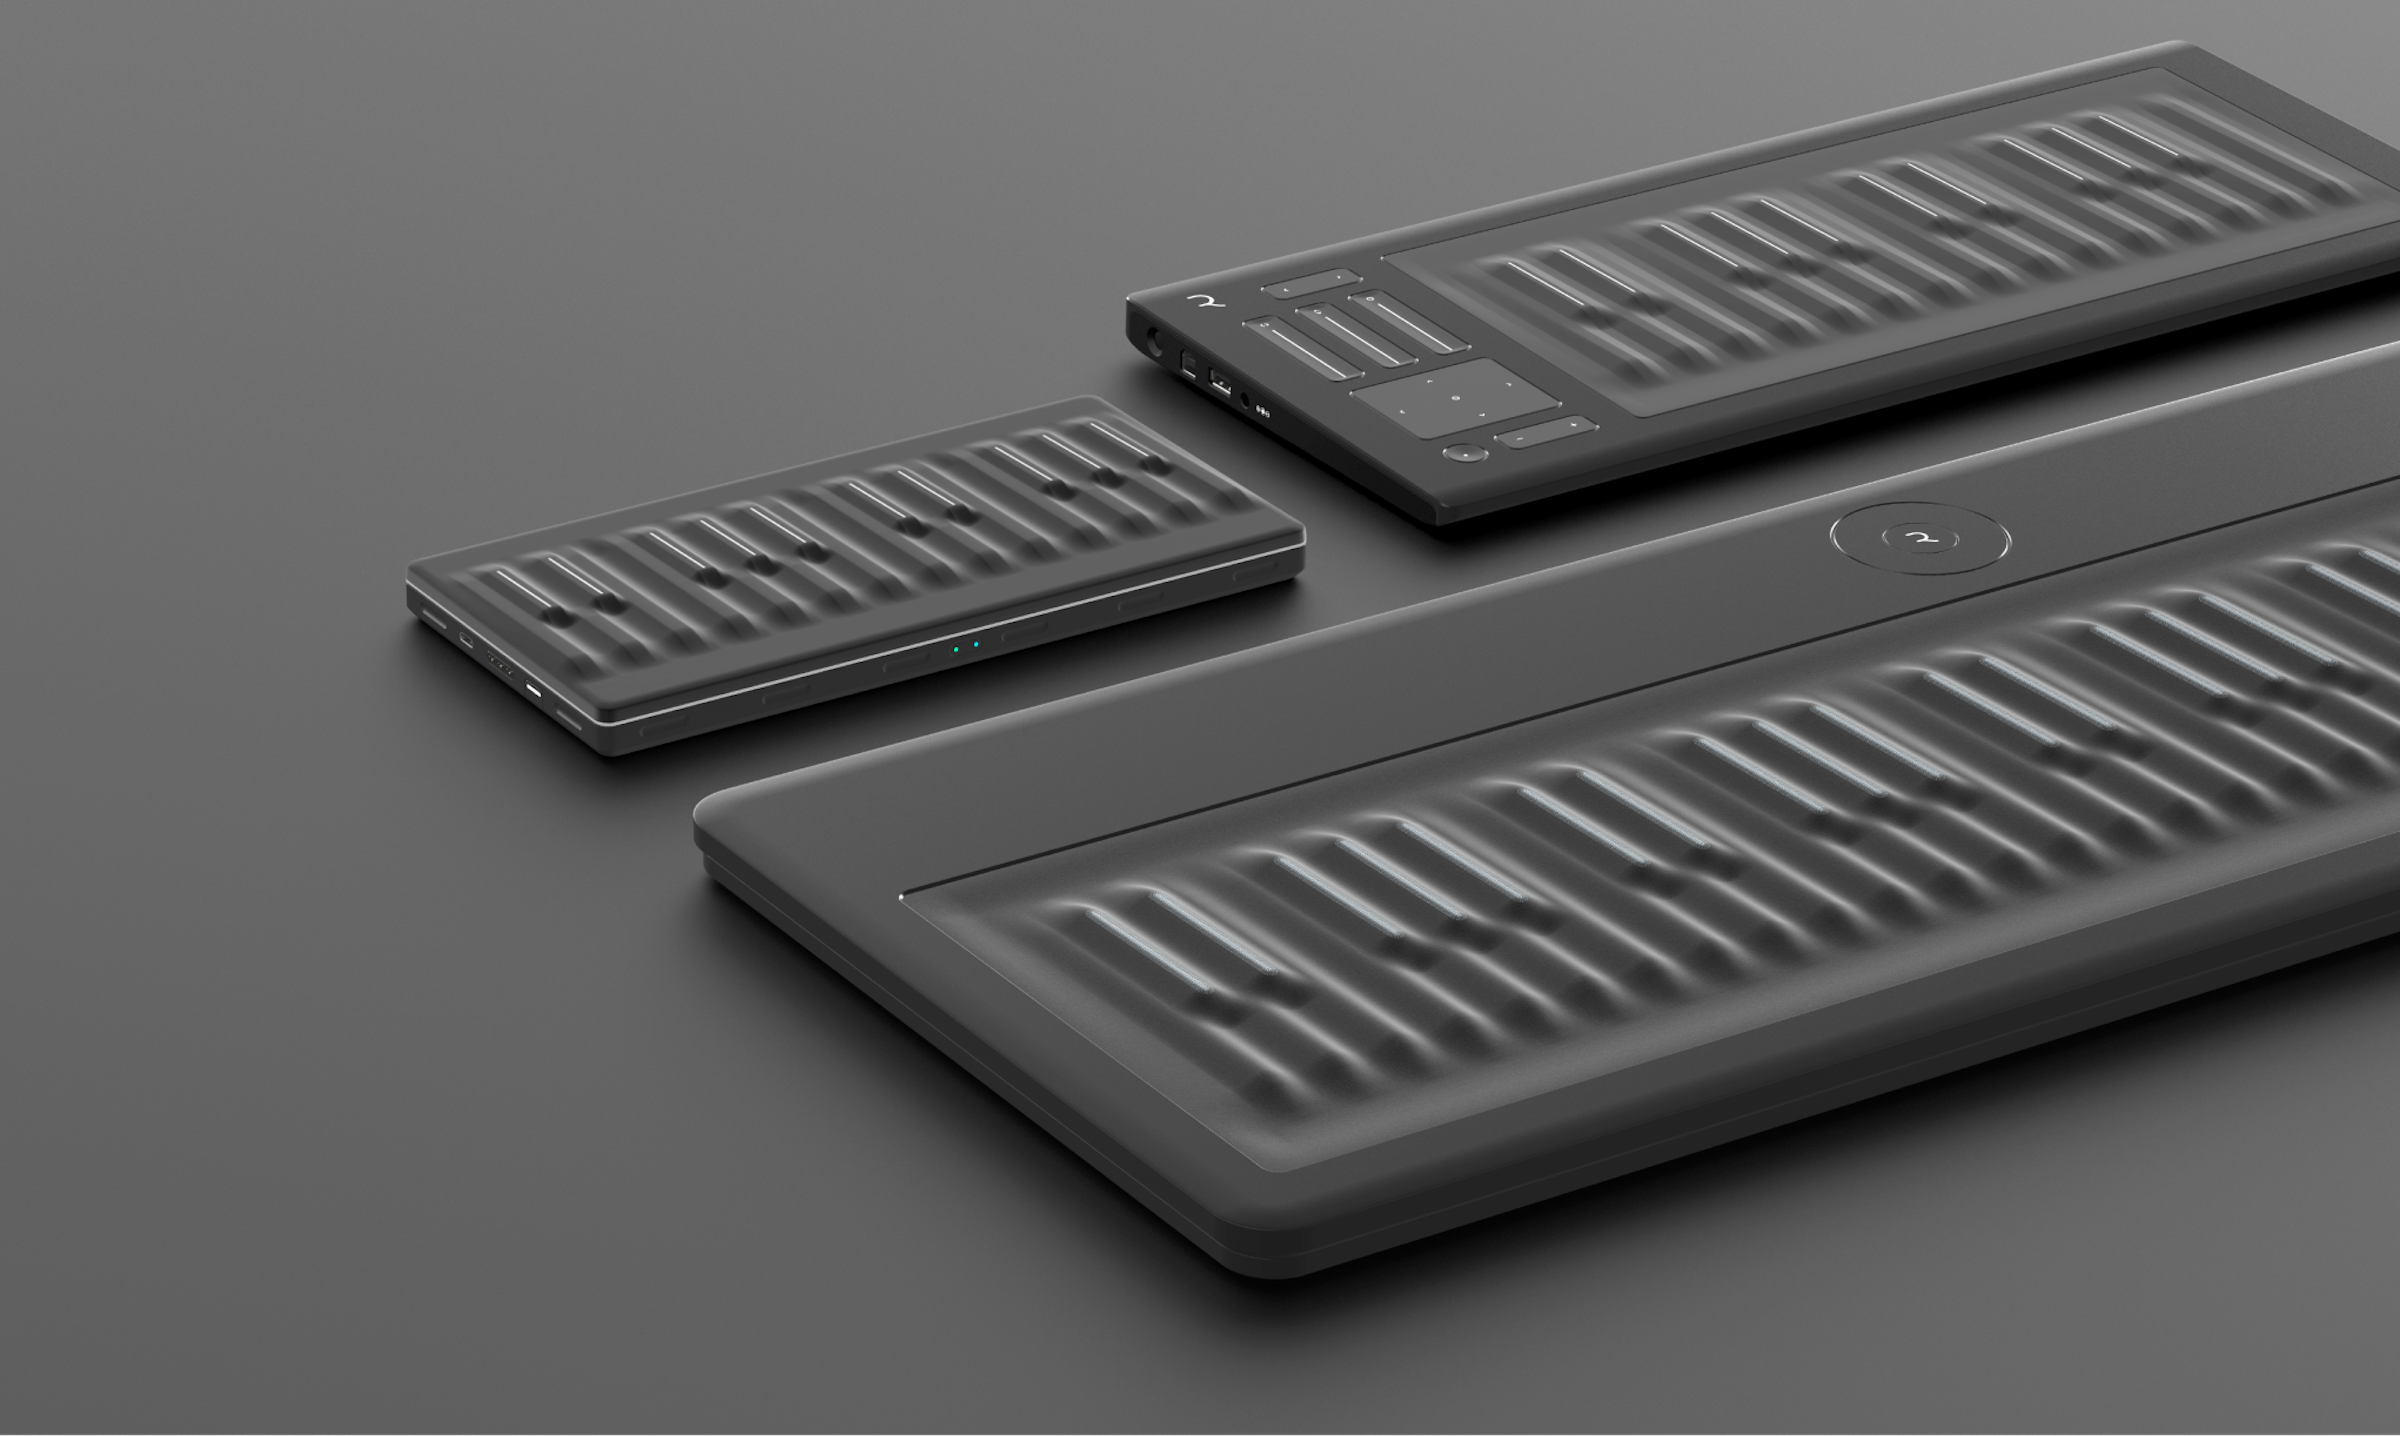 Roli keyboards in 3 editions